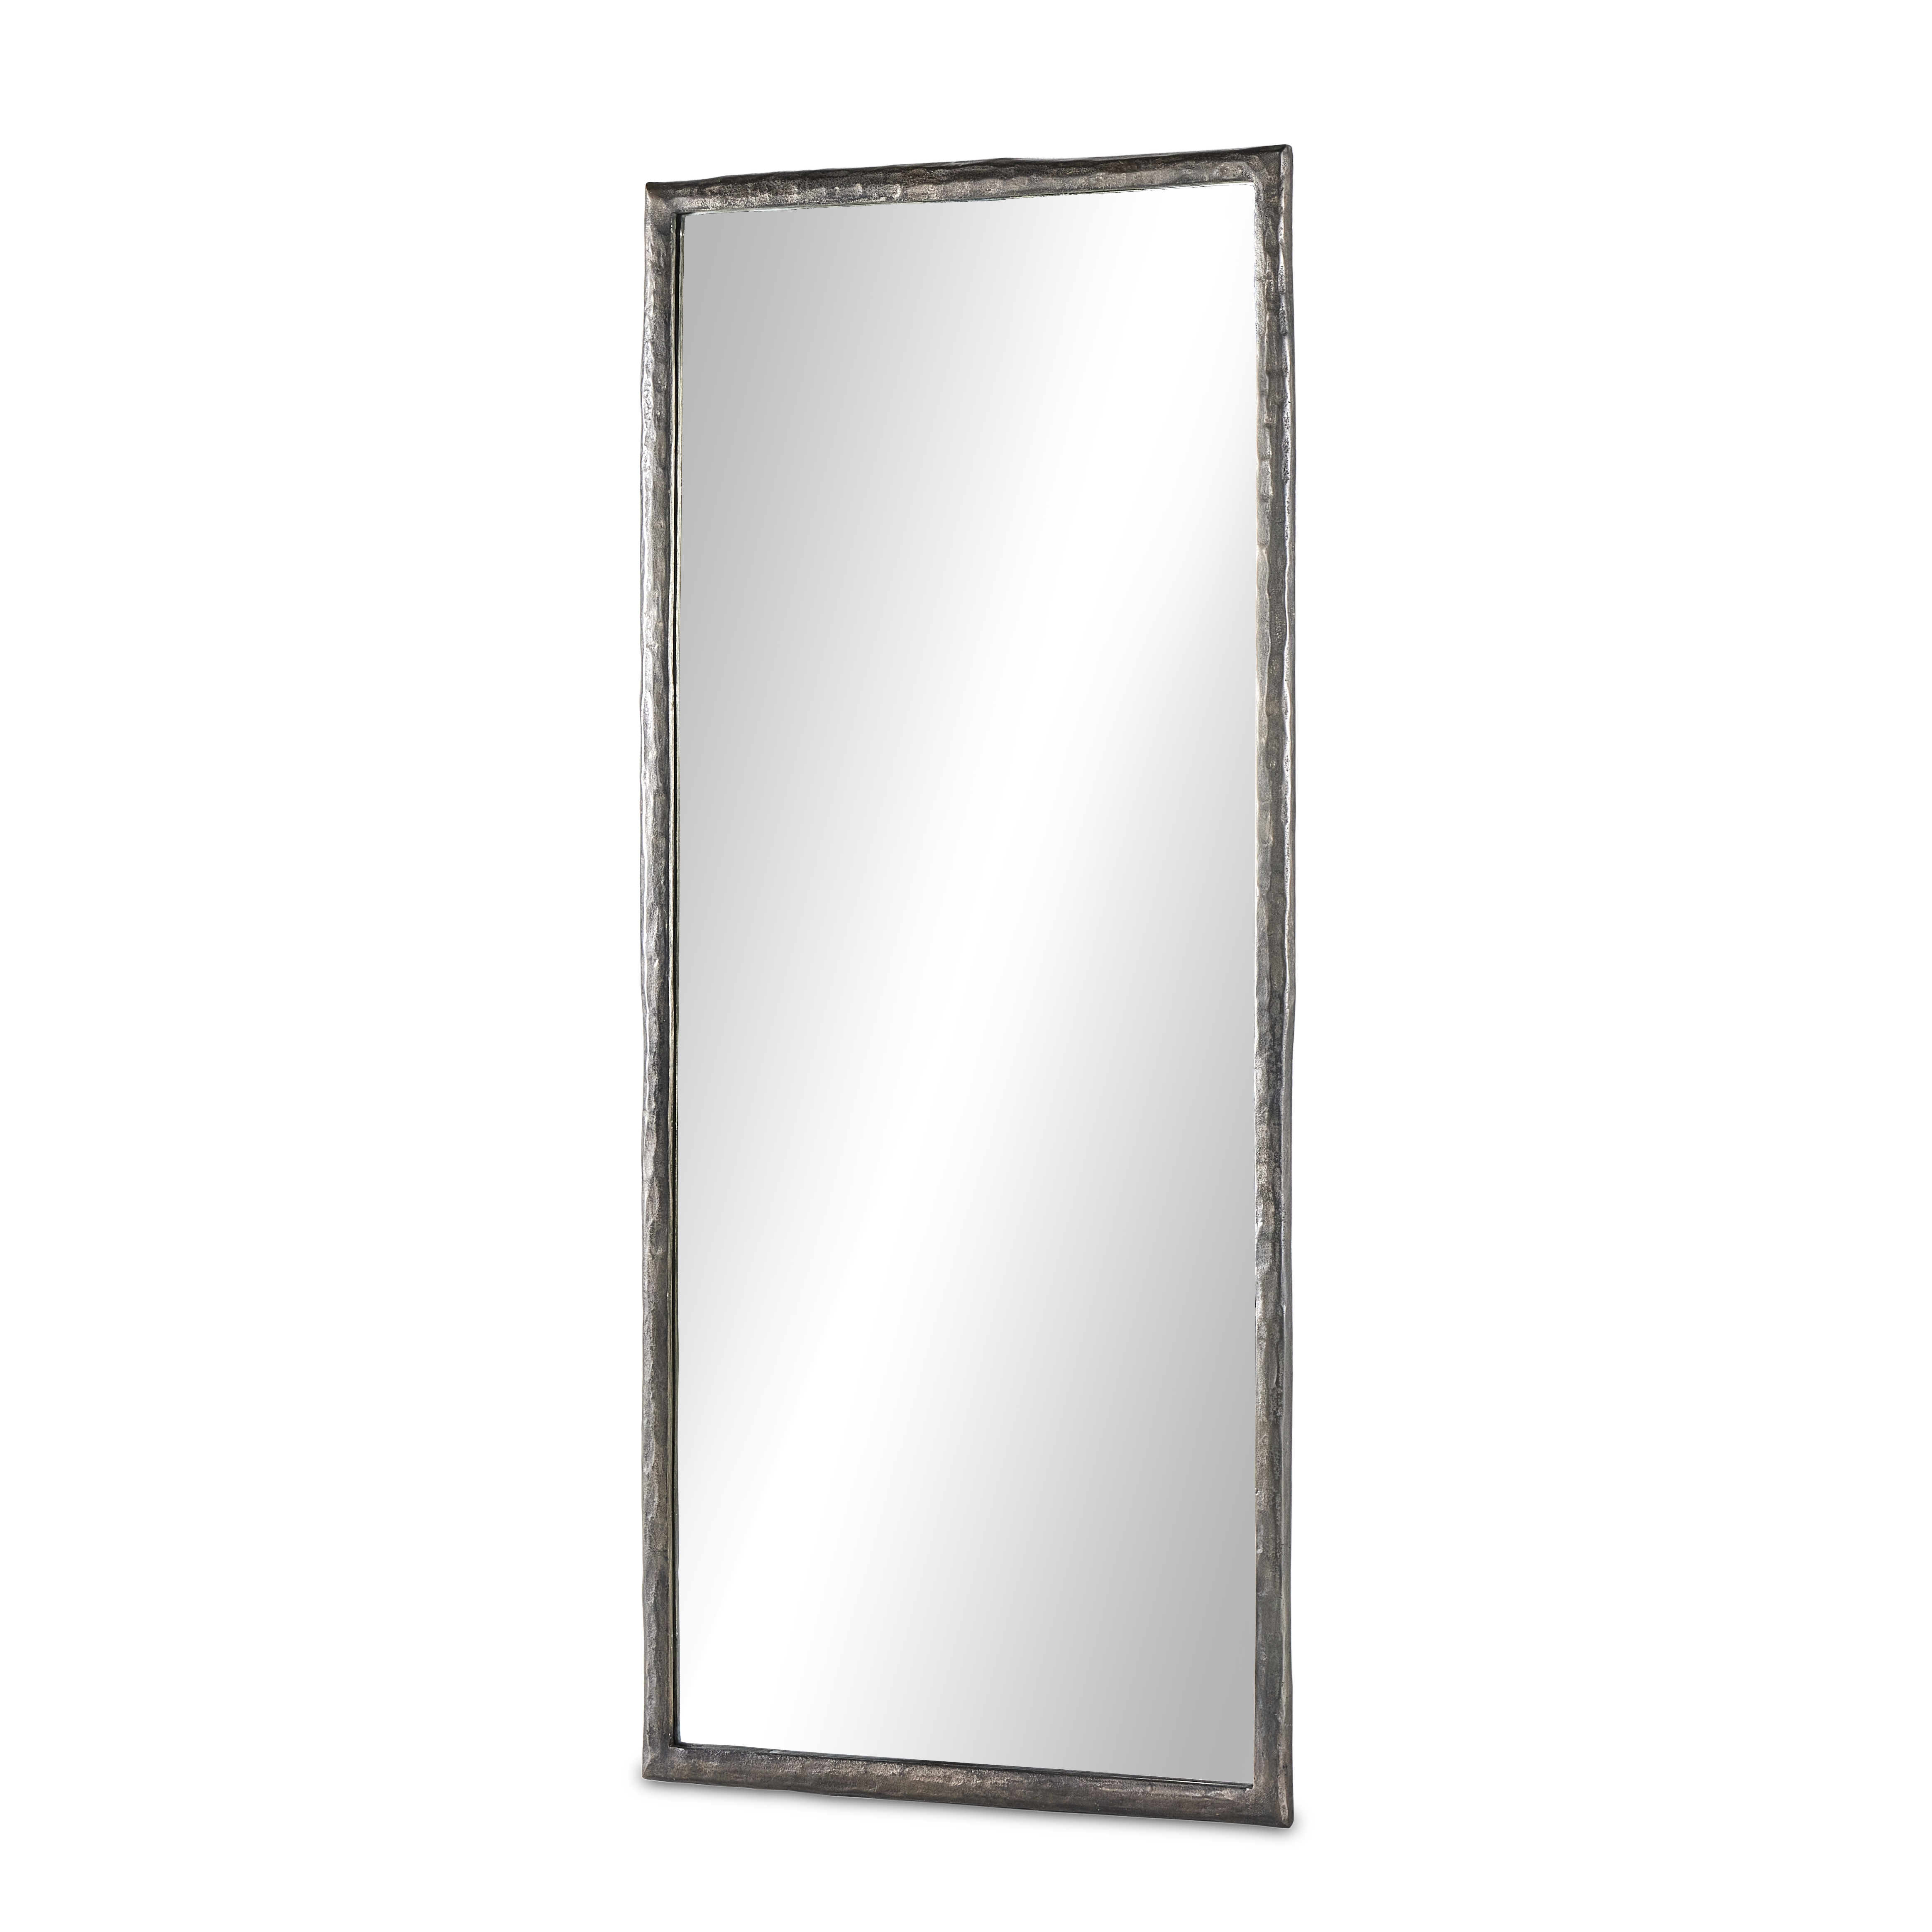 Langford Floor Mirror-Smoked Nickel - Image 1